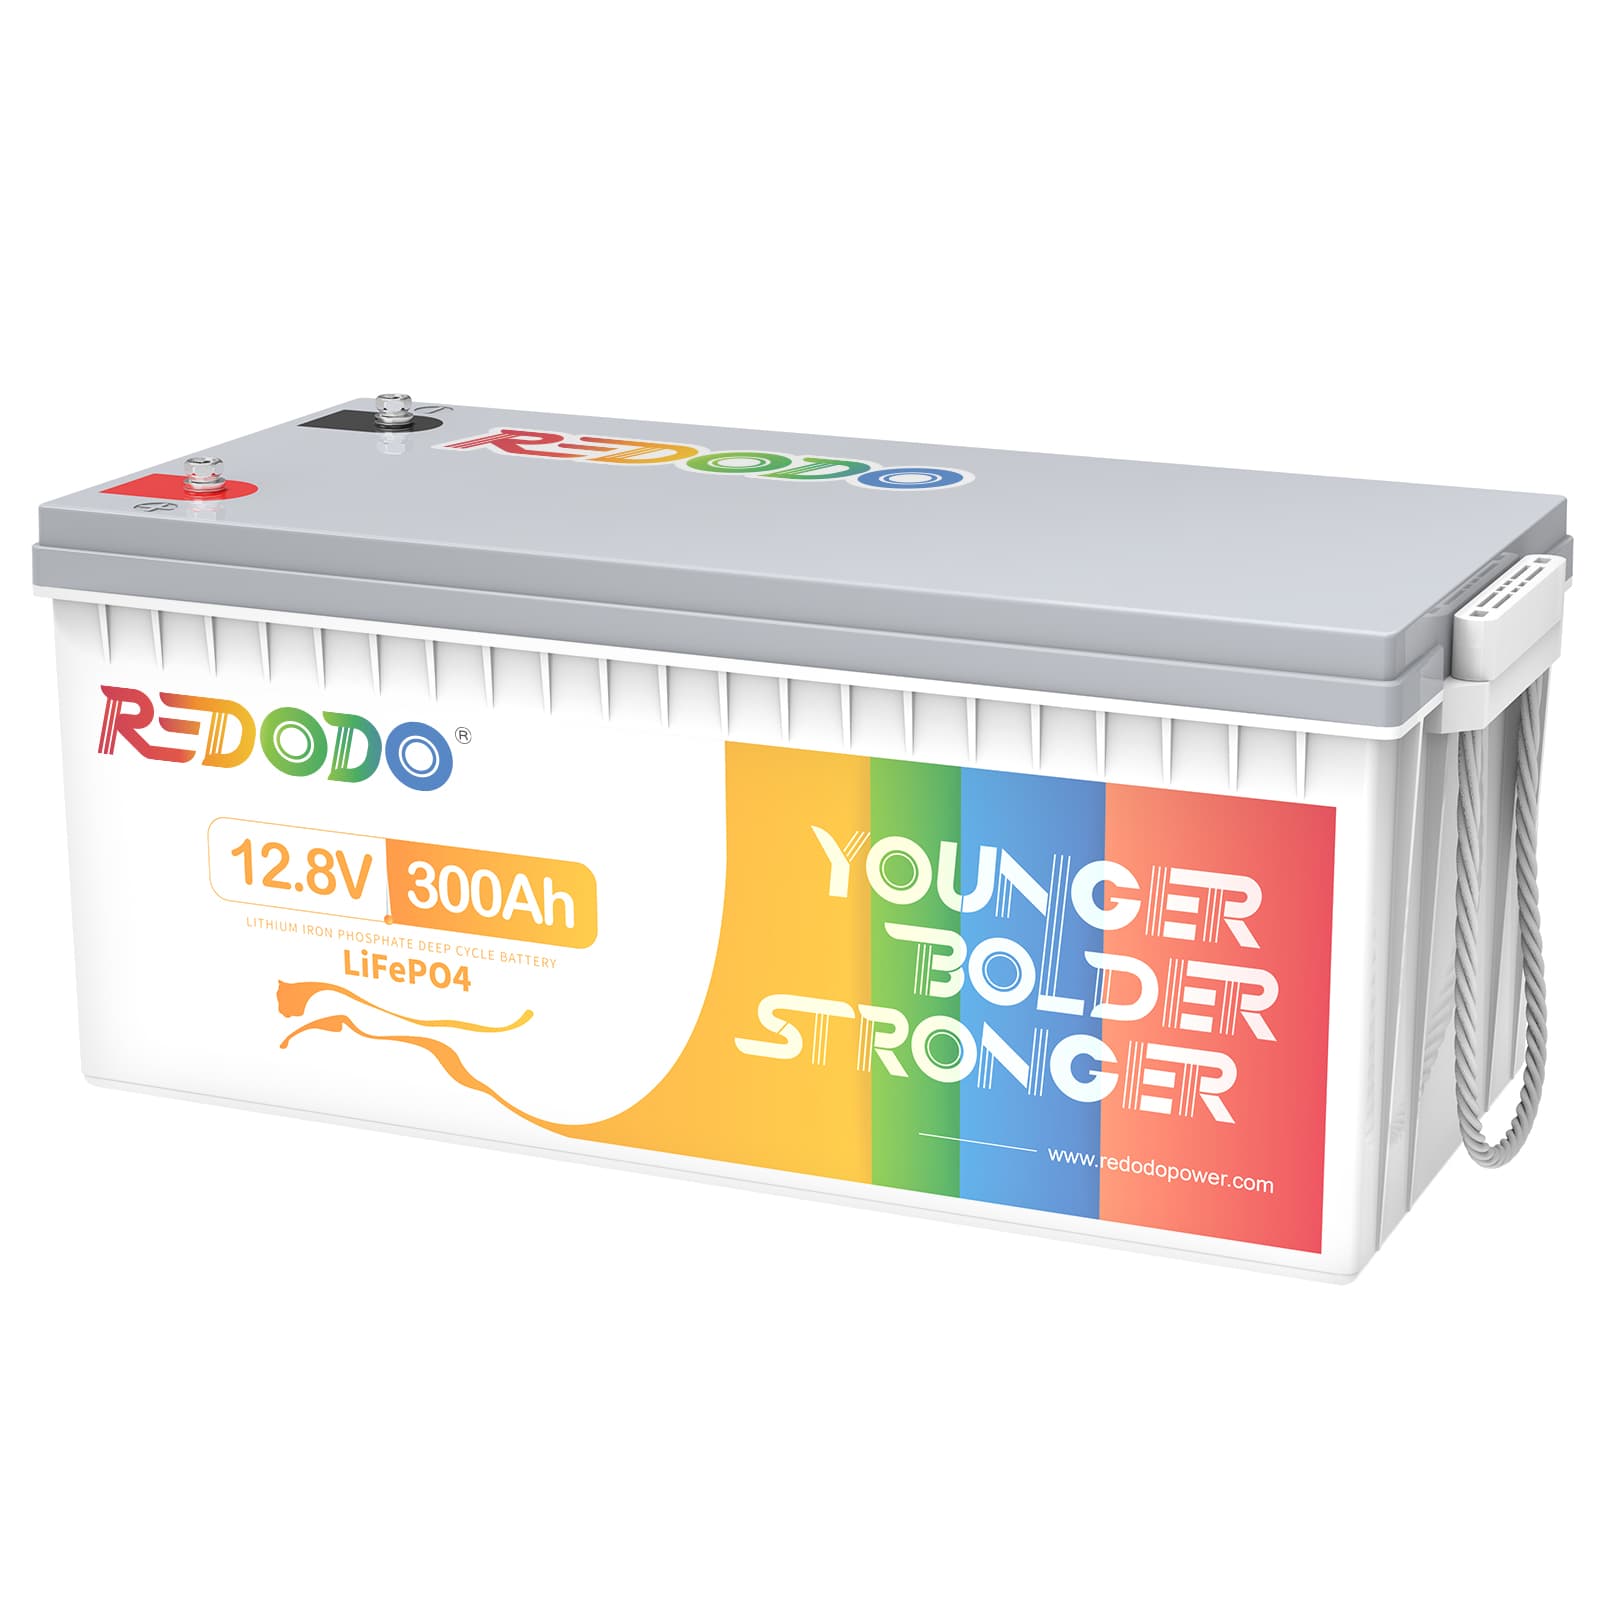 https://jp.redodopower.com/products/redodo-12v-300ah-l